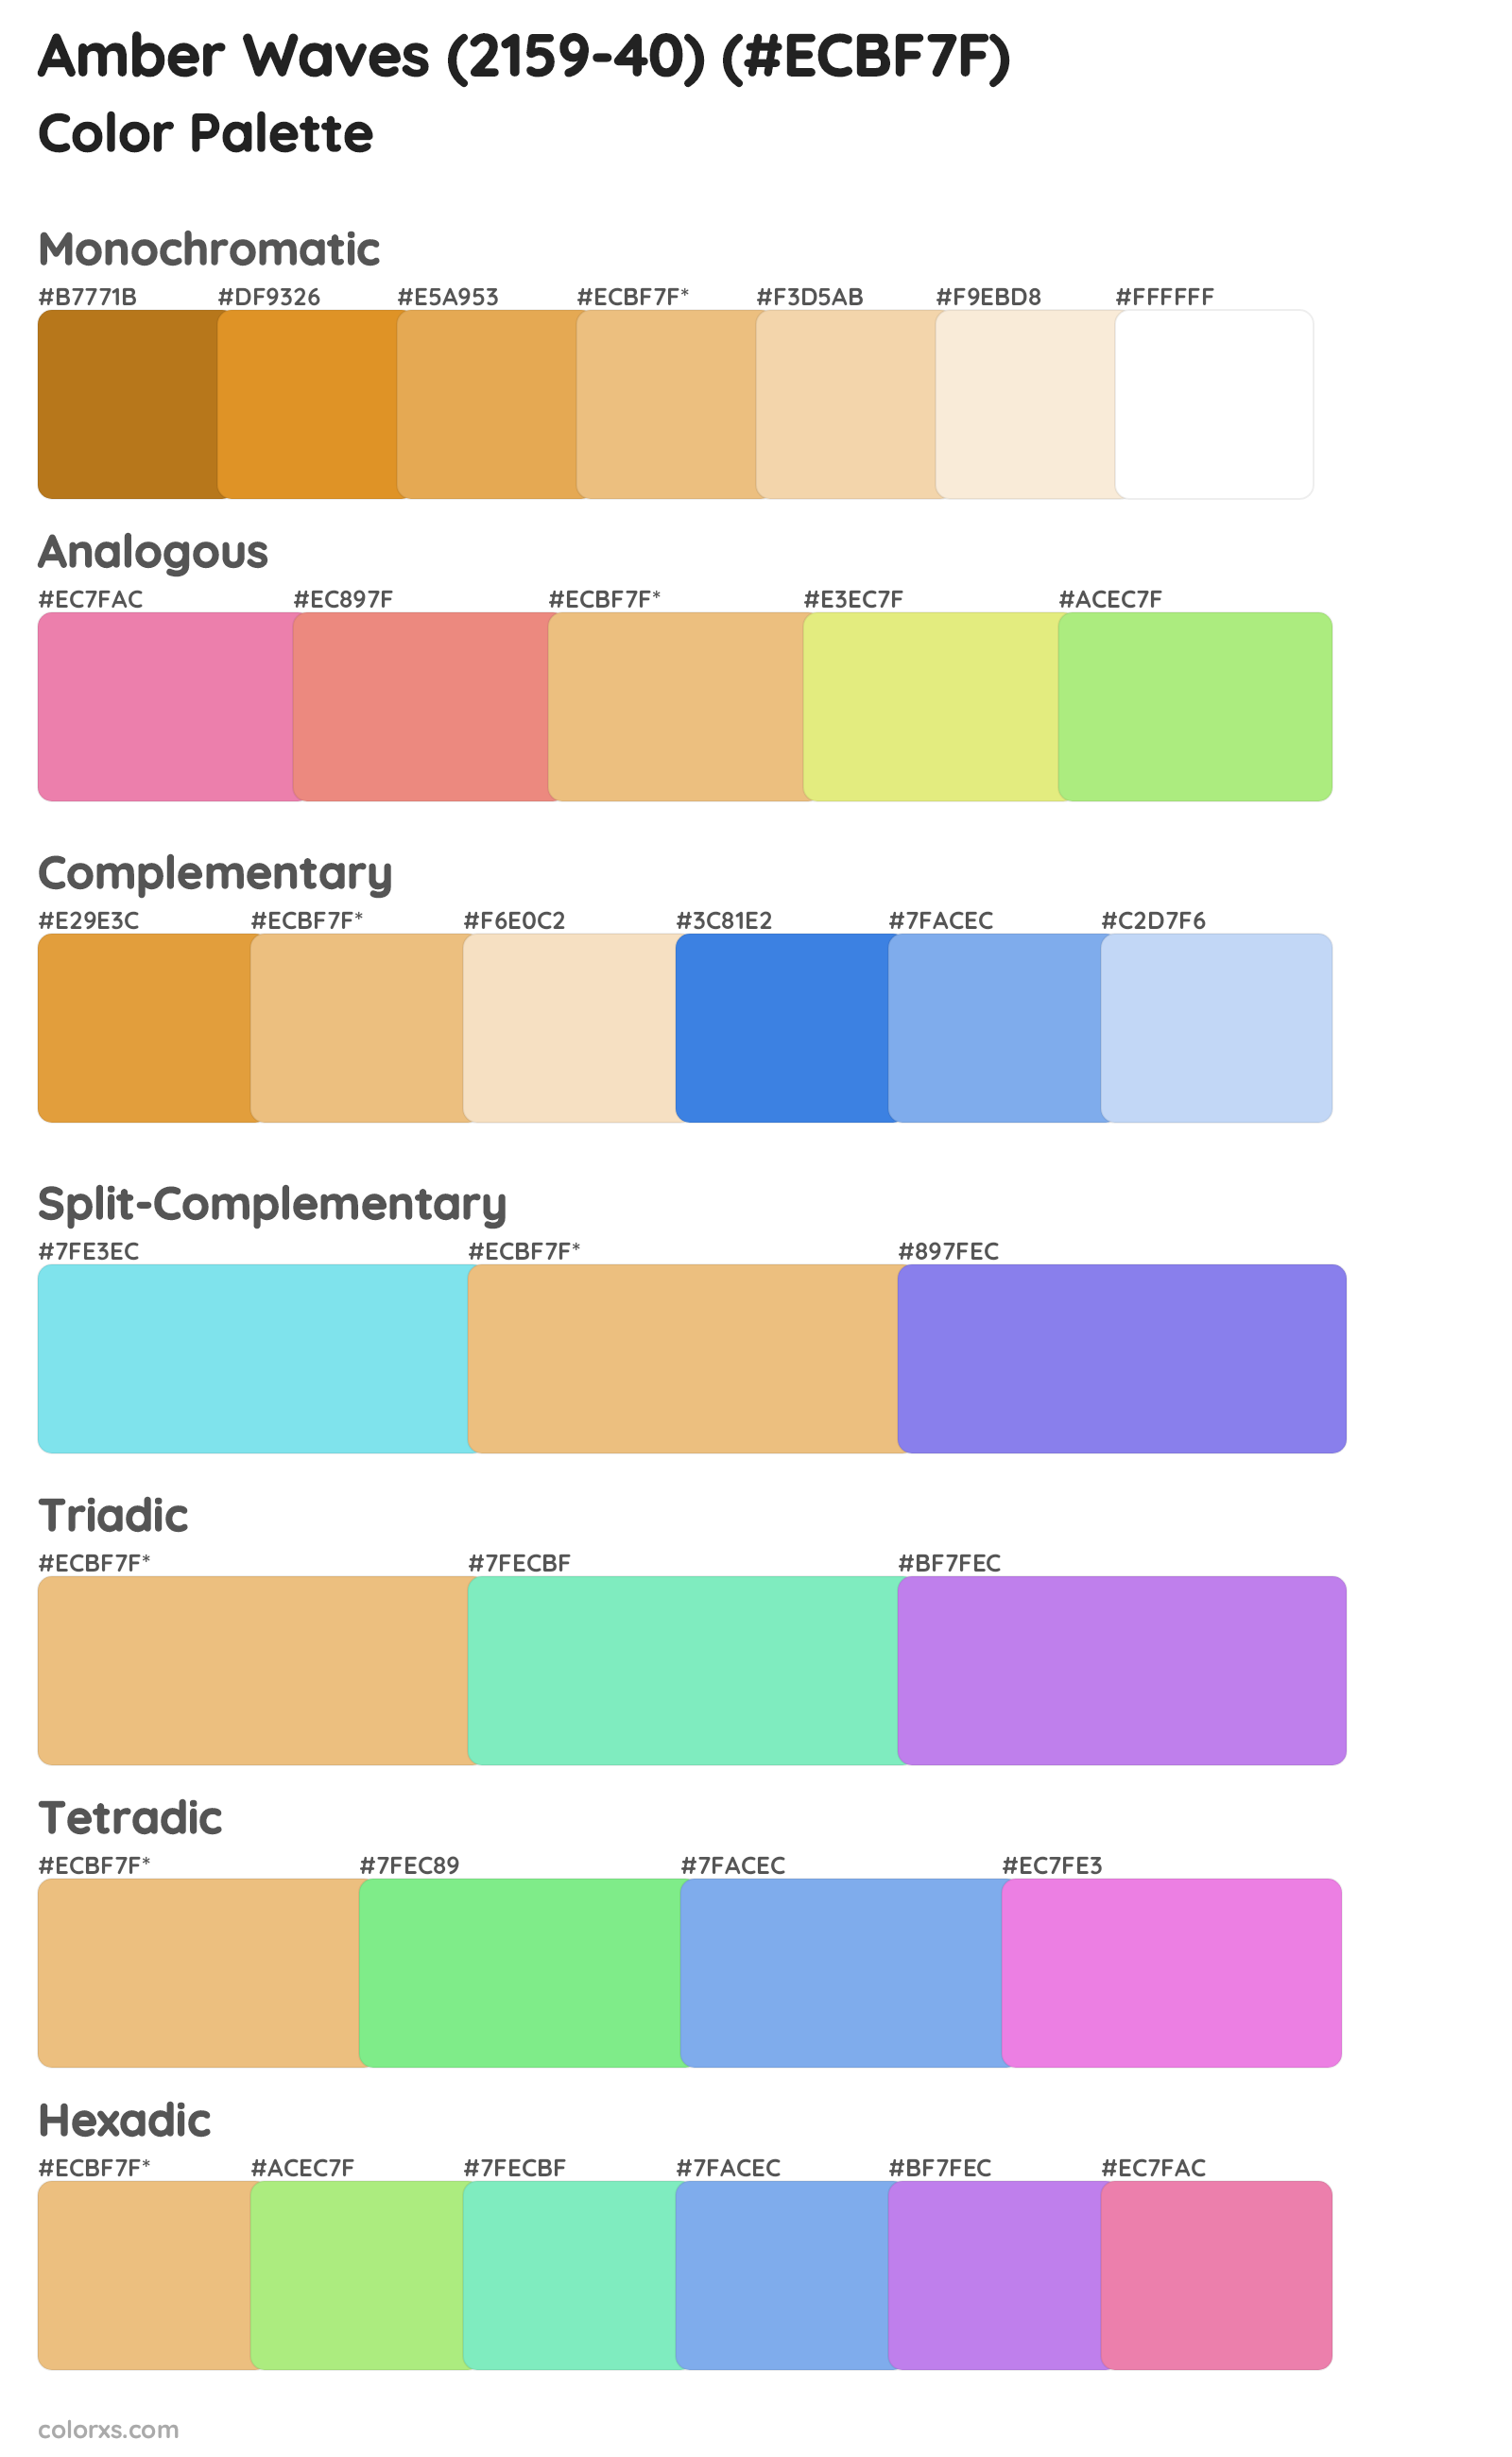 Amber Waves (2159-40) Color Scheme Palettes